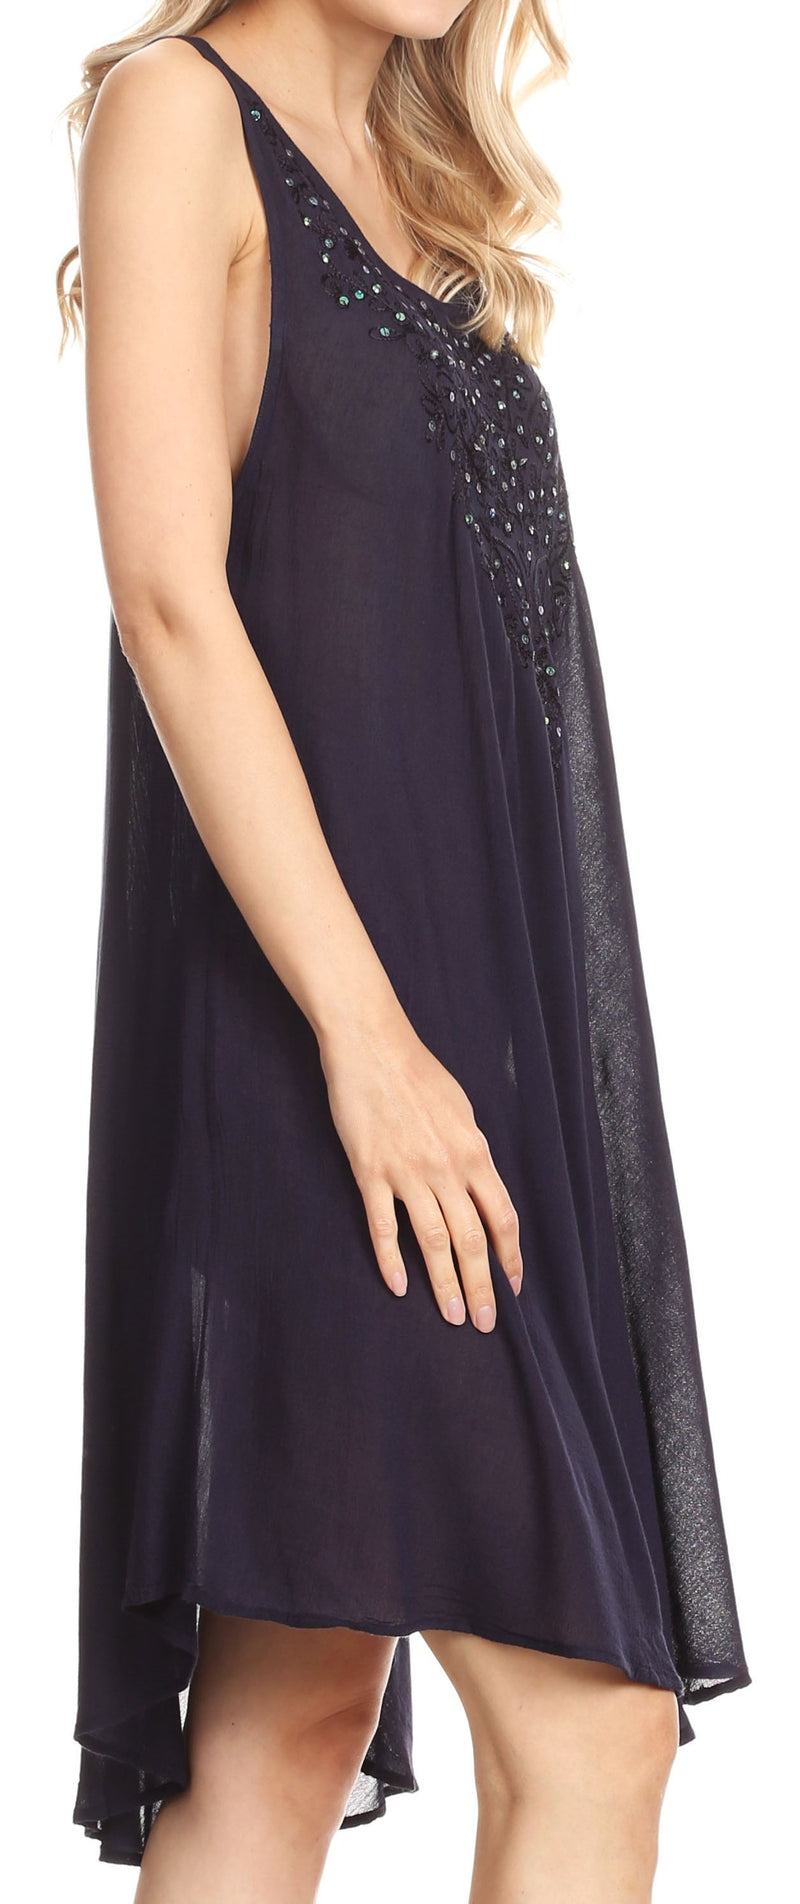 Sakkas Alechia Mid Length Tank Top Sleeveless Embroidered Caftan Dress / Cover Up